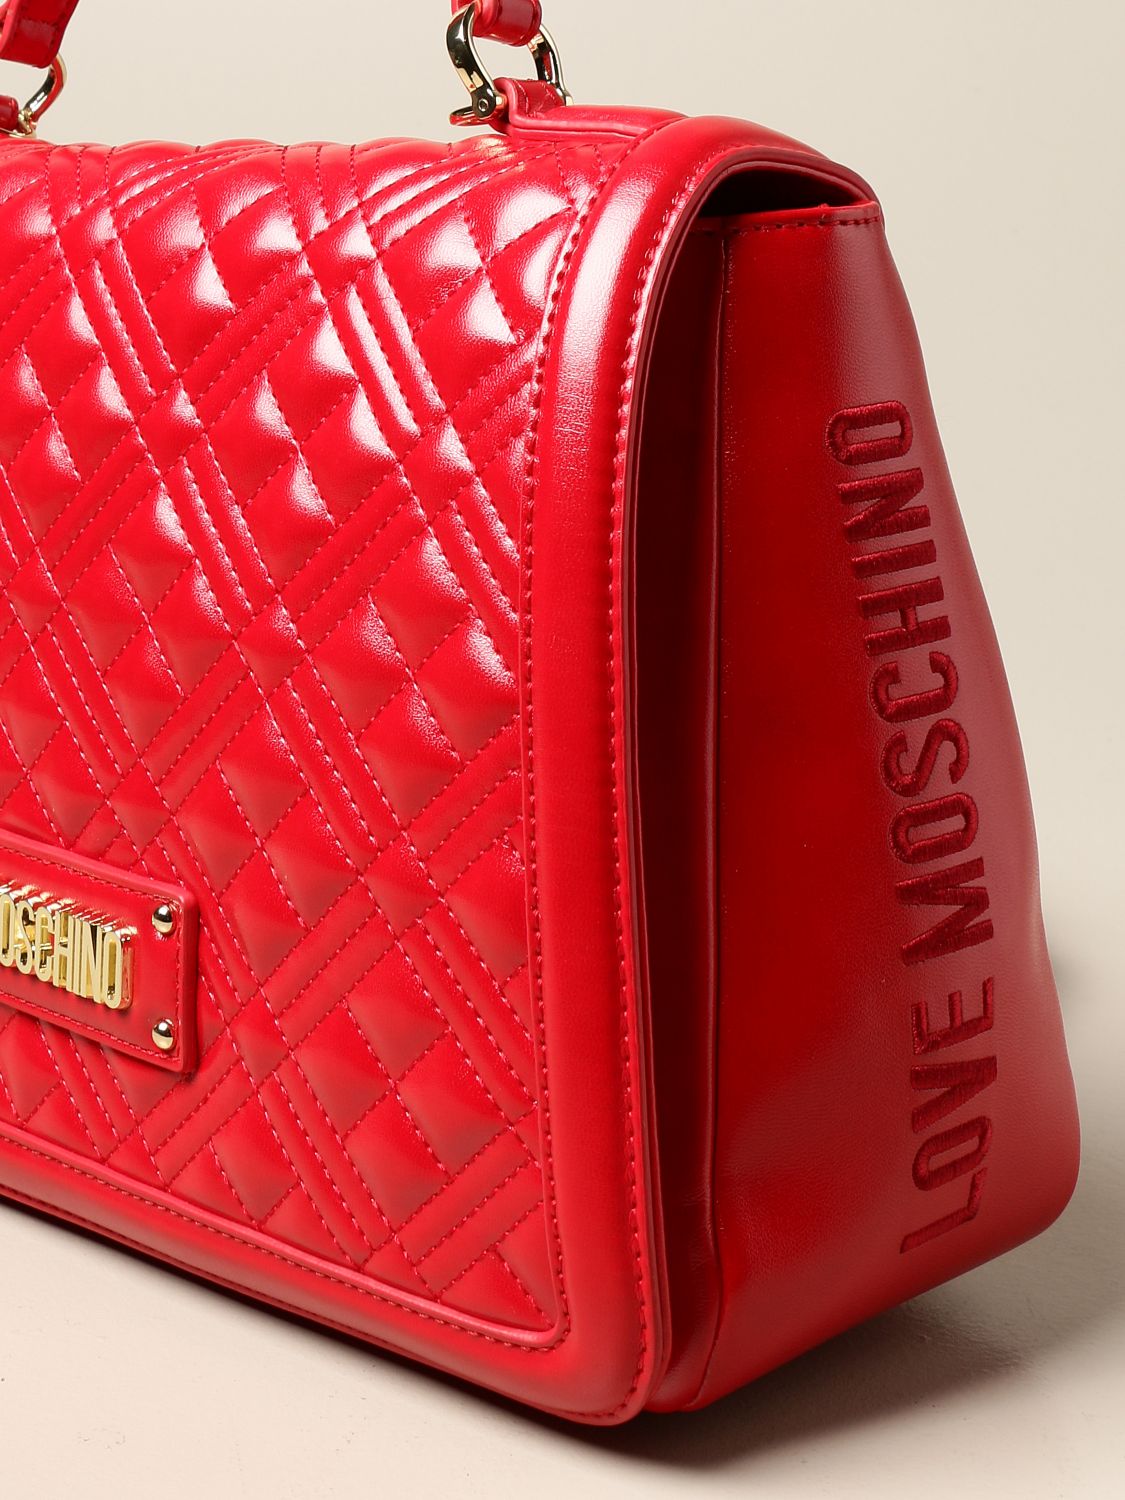 moschino red handbag